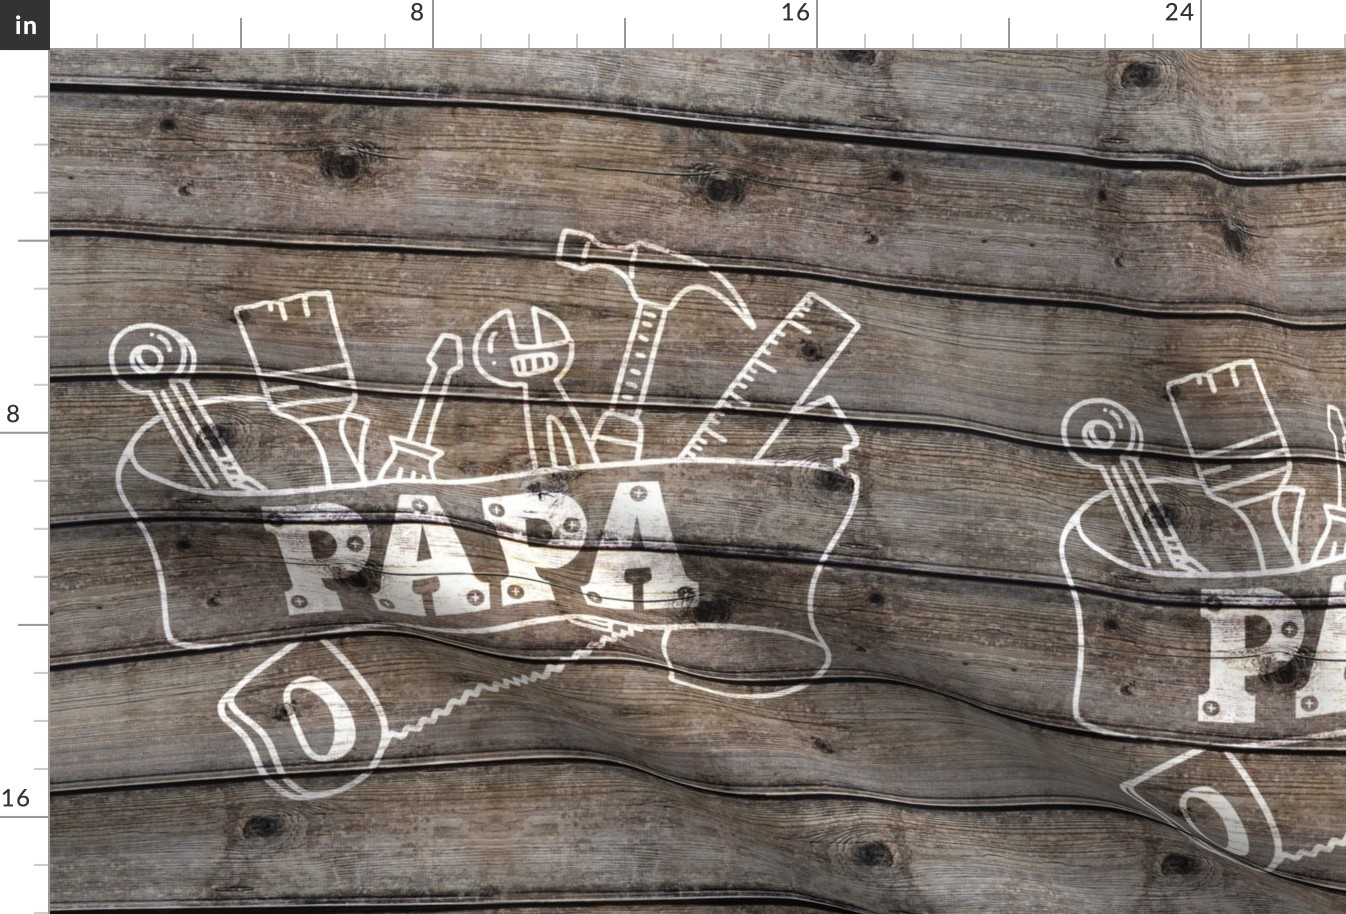 Papa Tools 18 inch square on barn wood